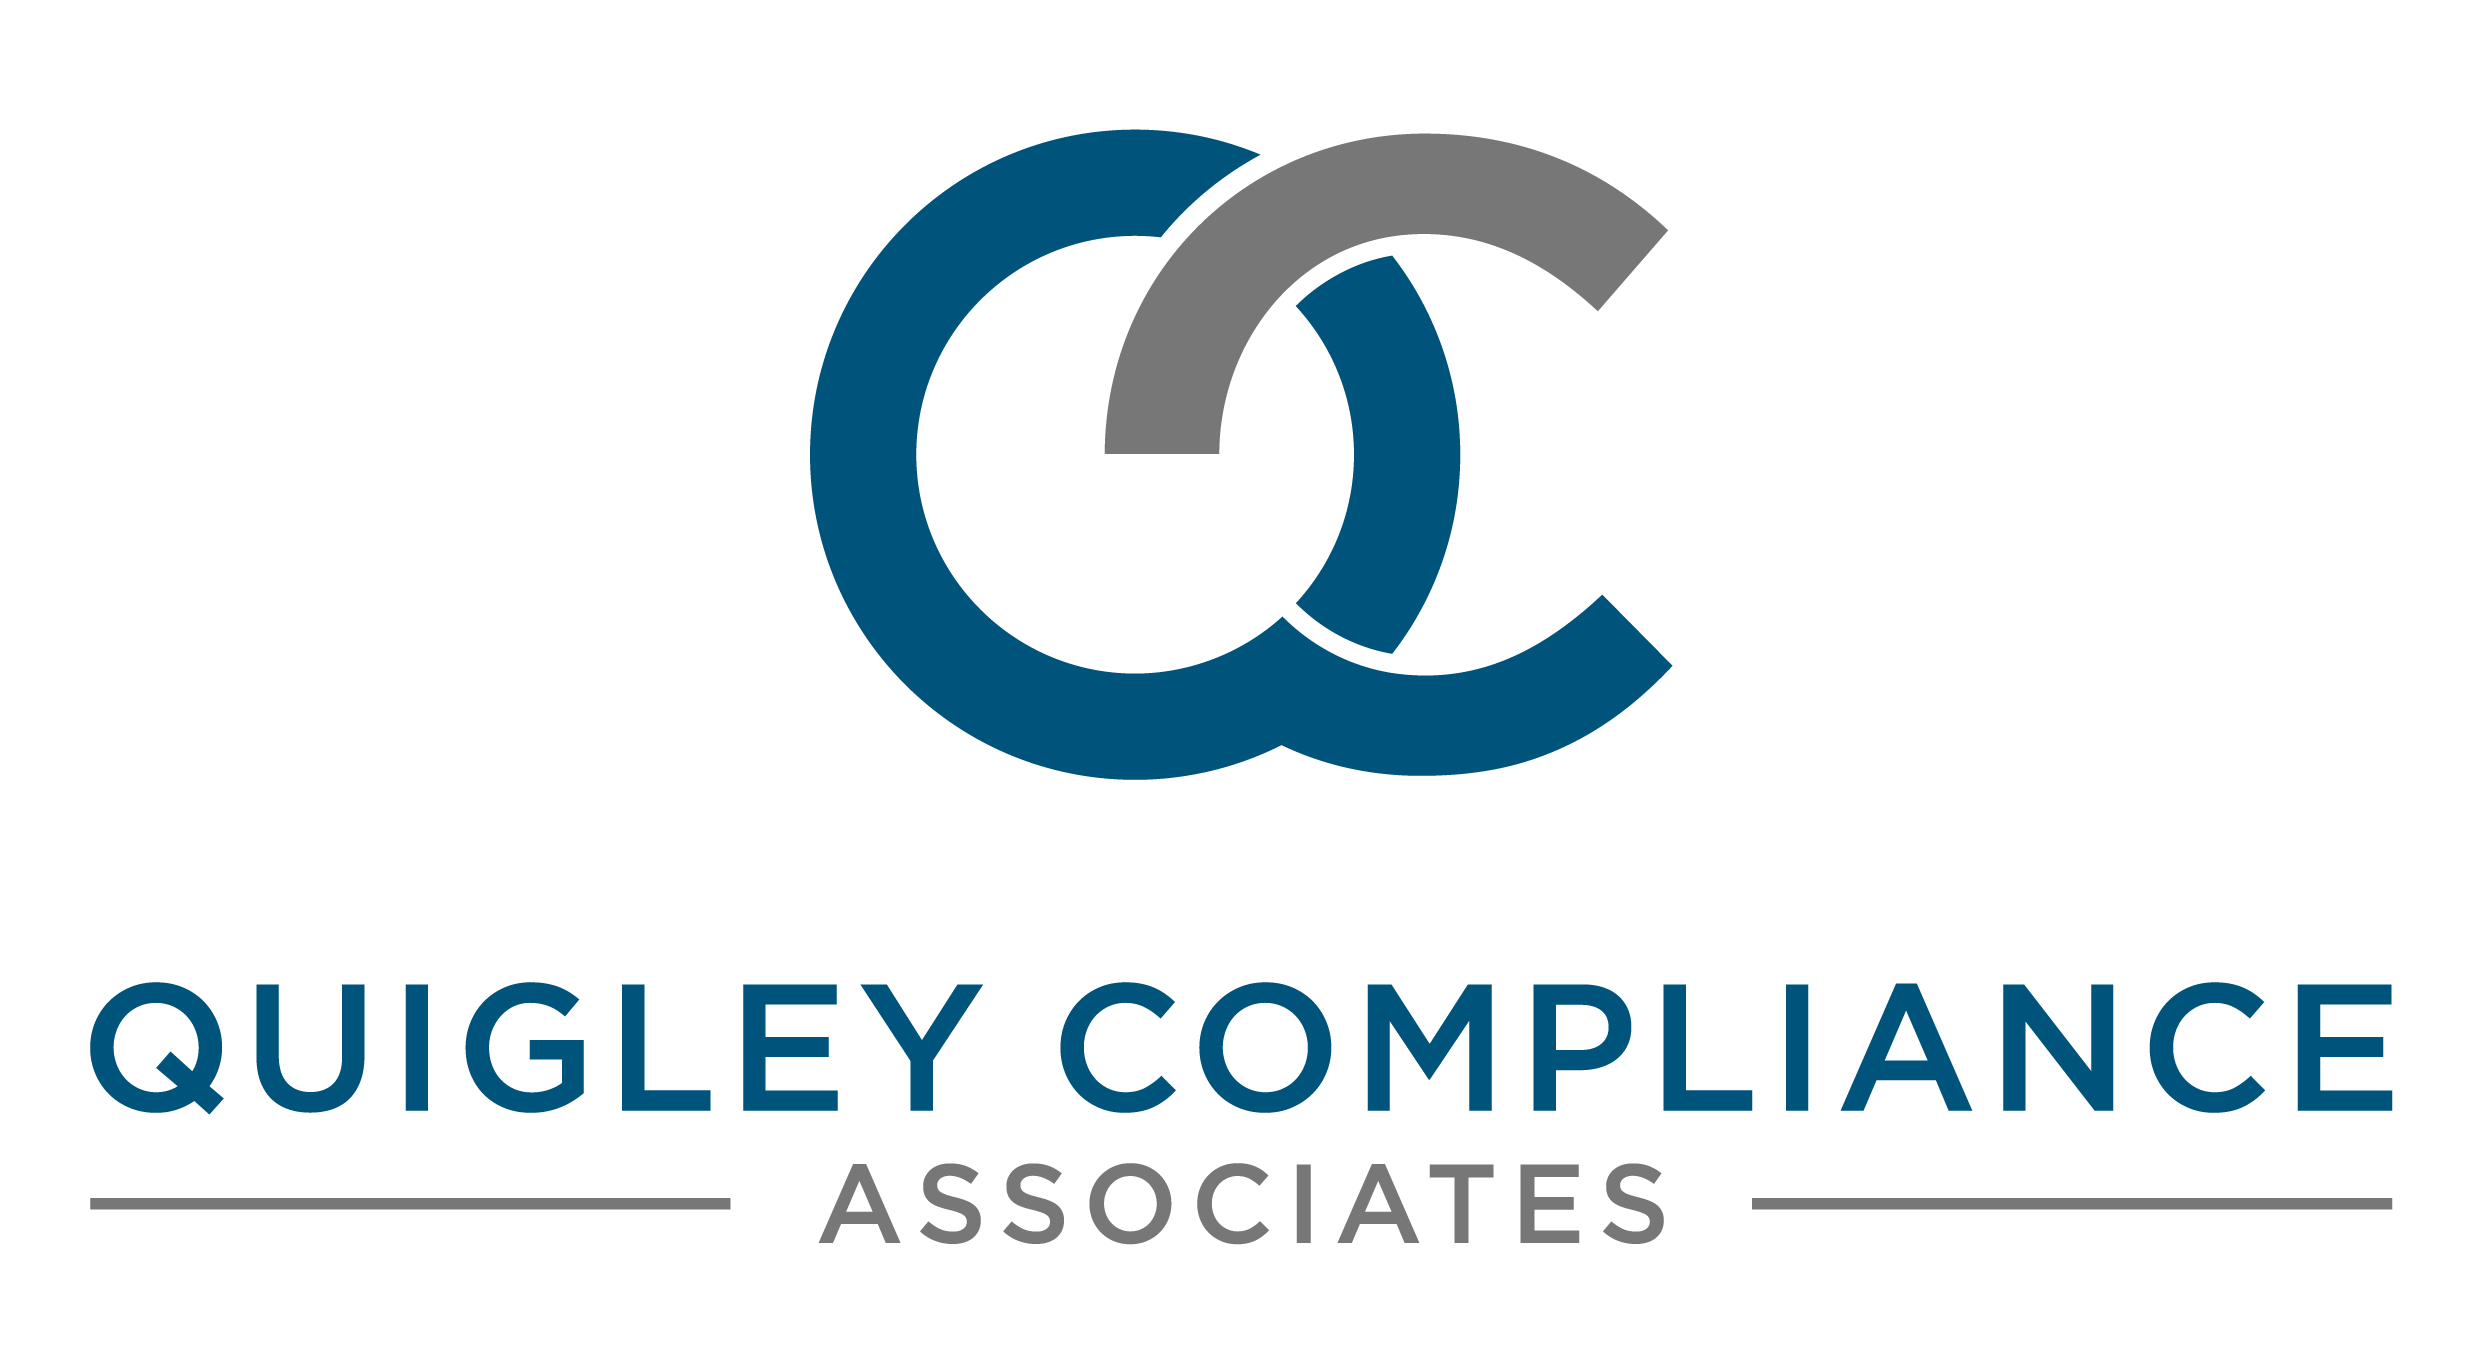 Quigley Compliance Associates